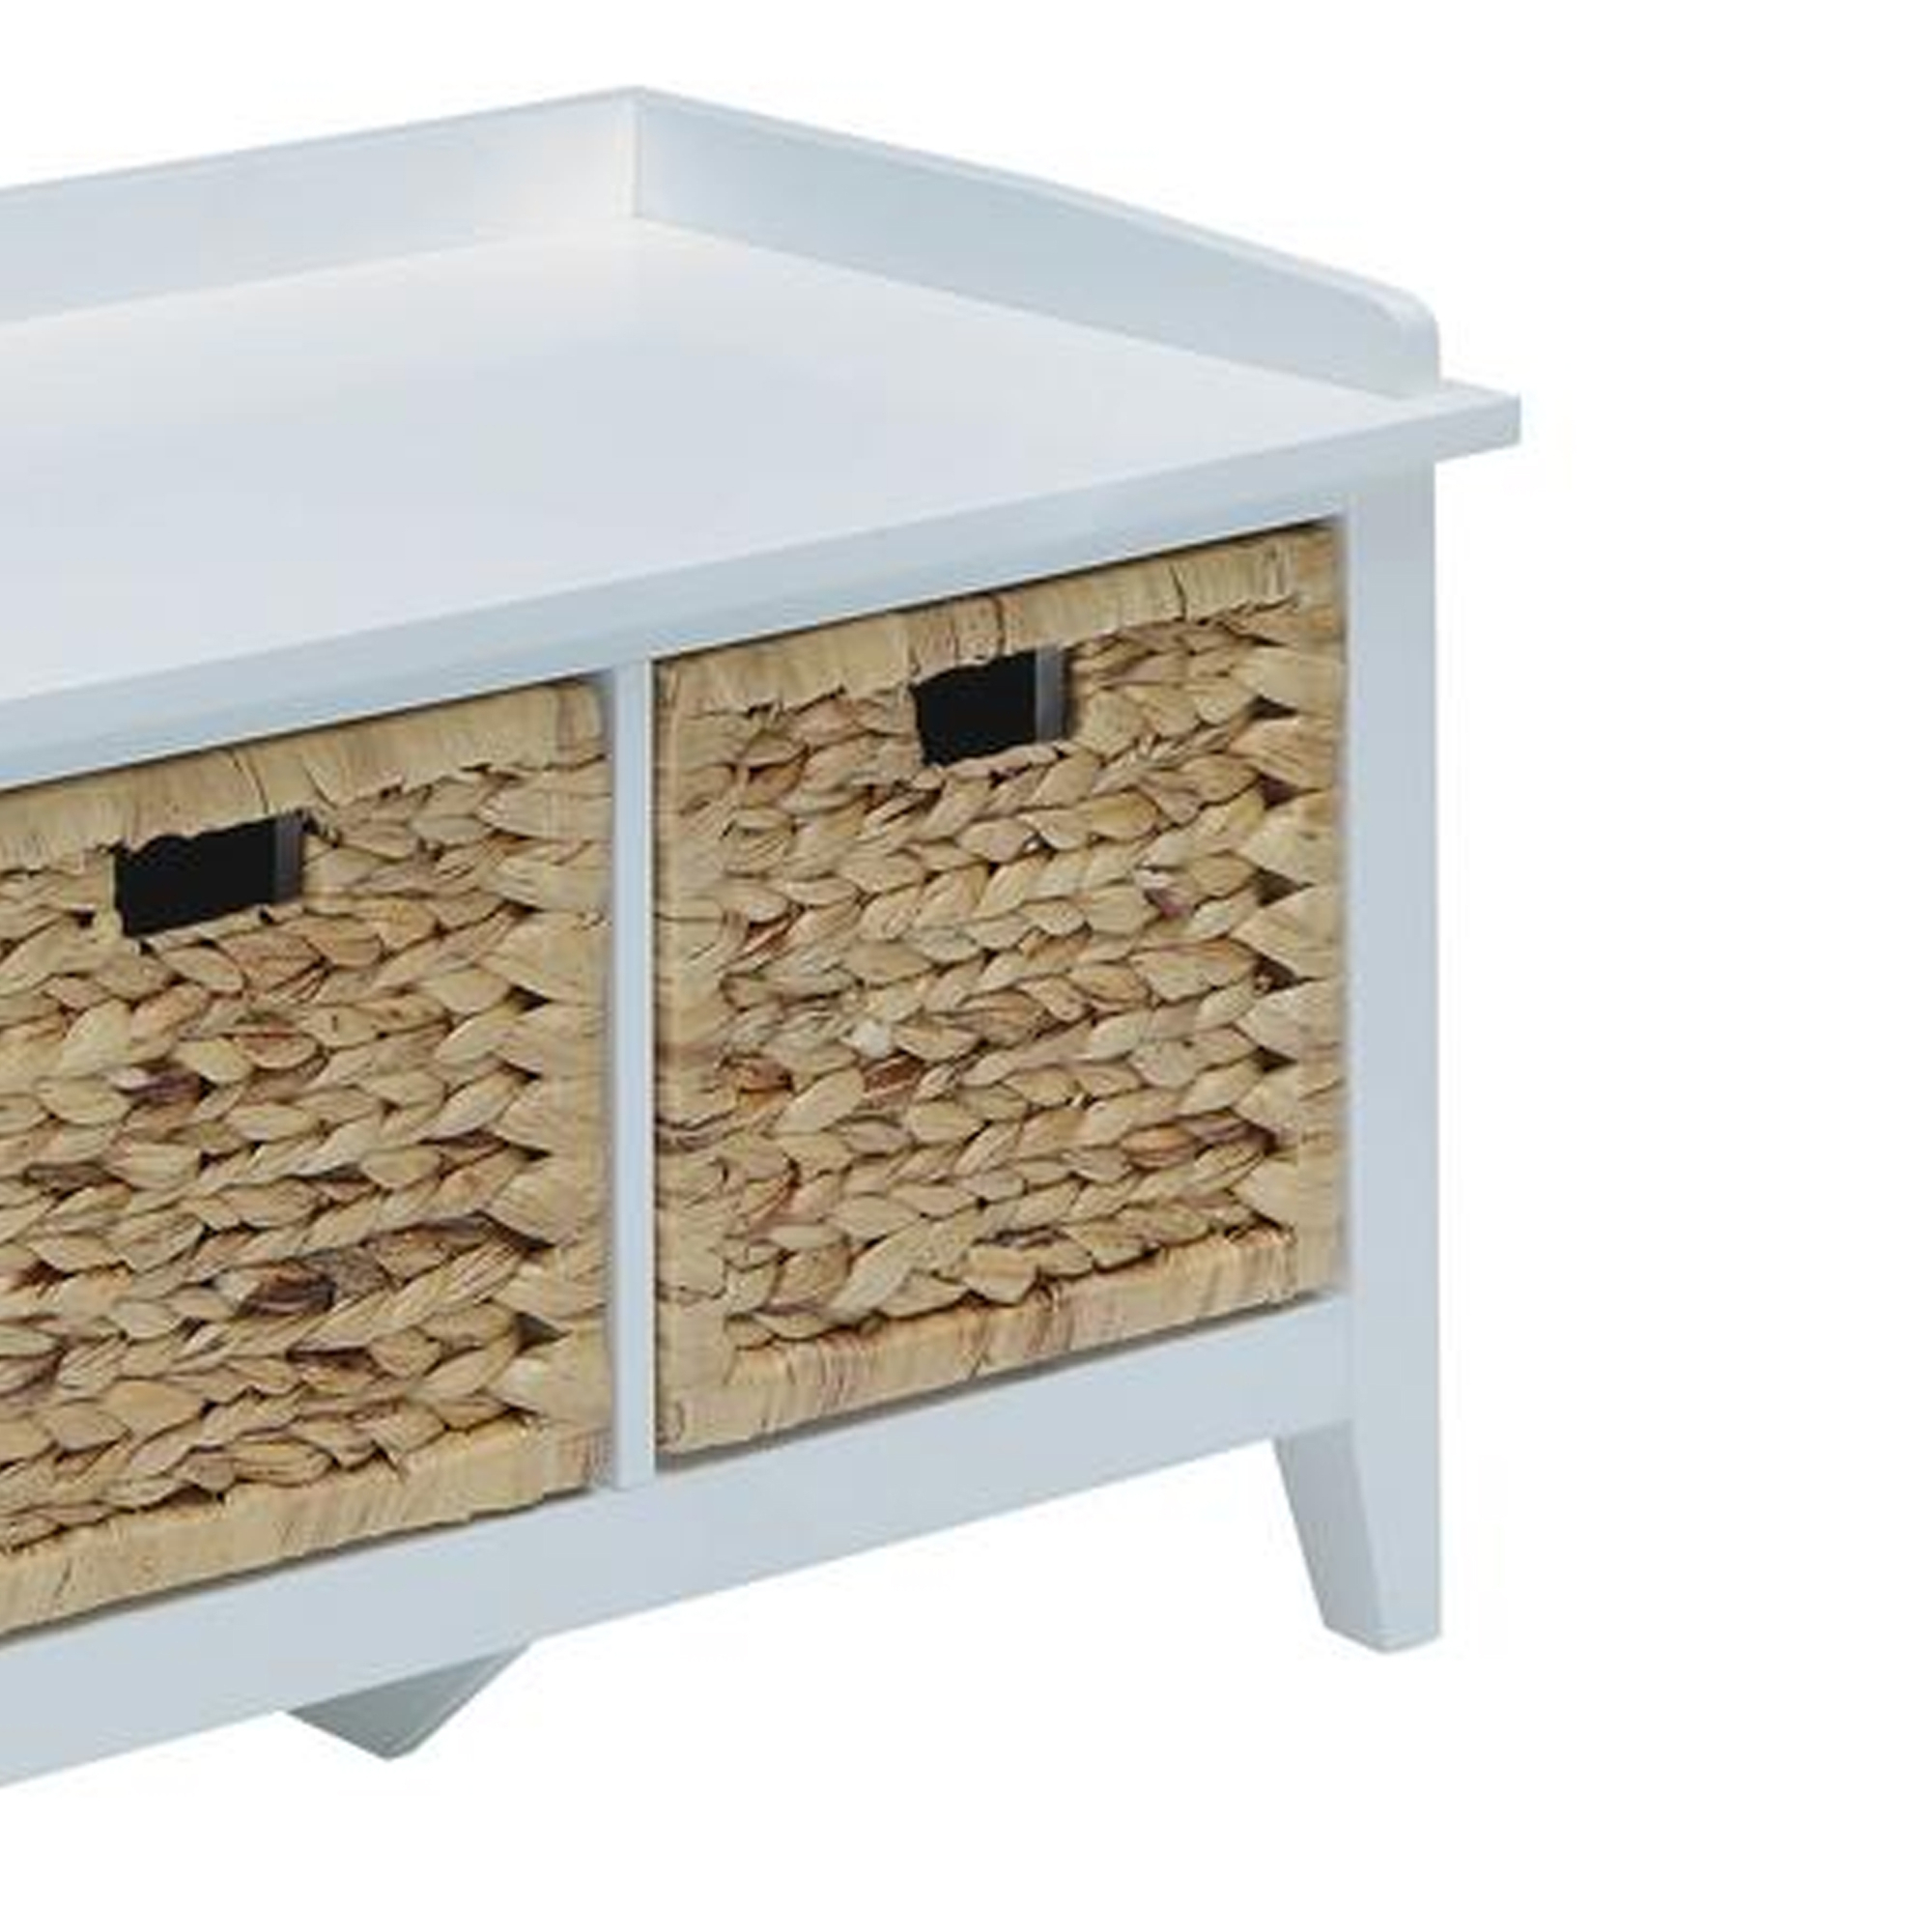 Rectangular Wooden Bench With Storage Basket, White- Saltoro Sherpi